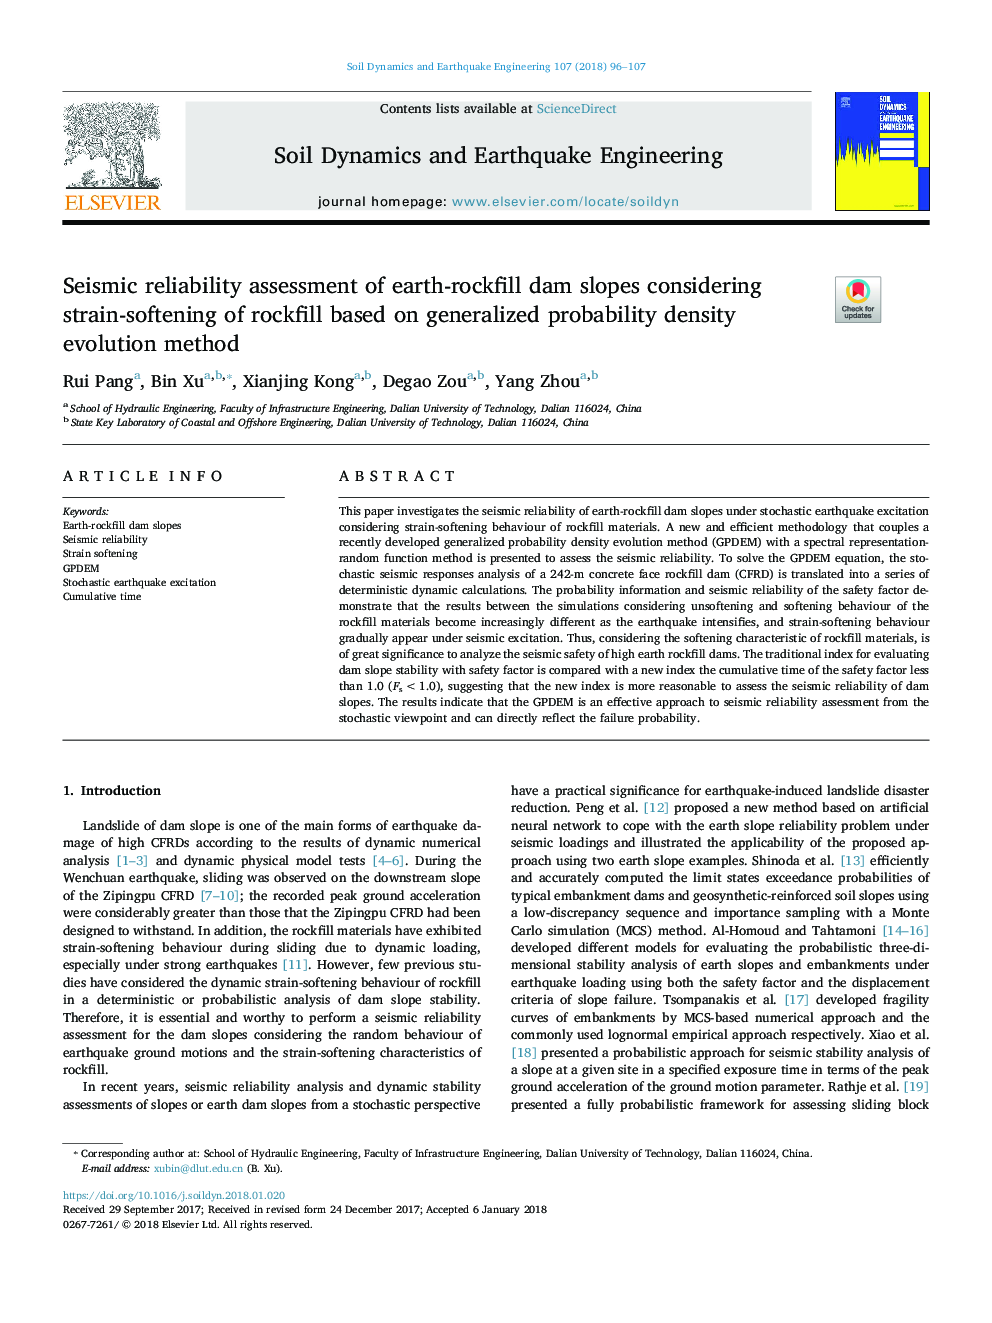 Seismic reliability assessment of earth-rockfill dam slopes considering strain-softening of rockfill based on generalized probability density evolution method